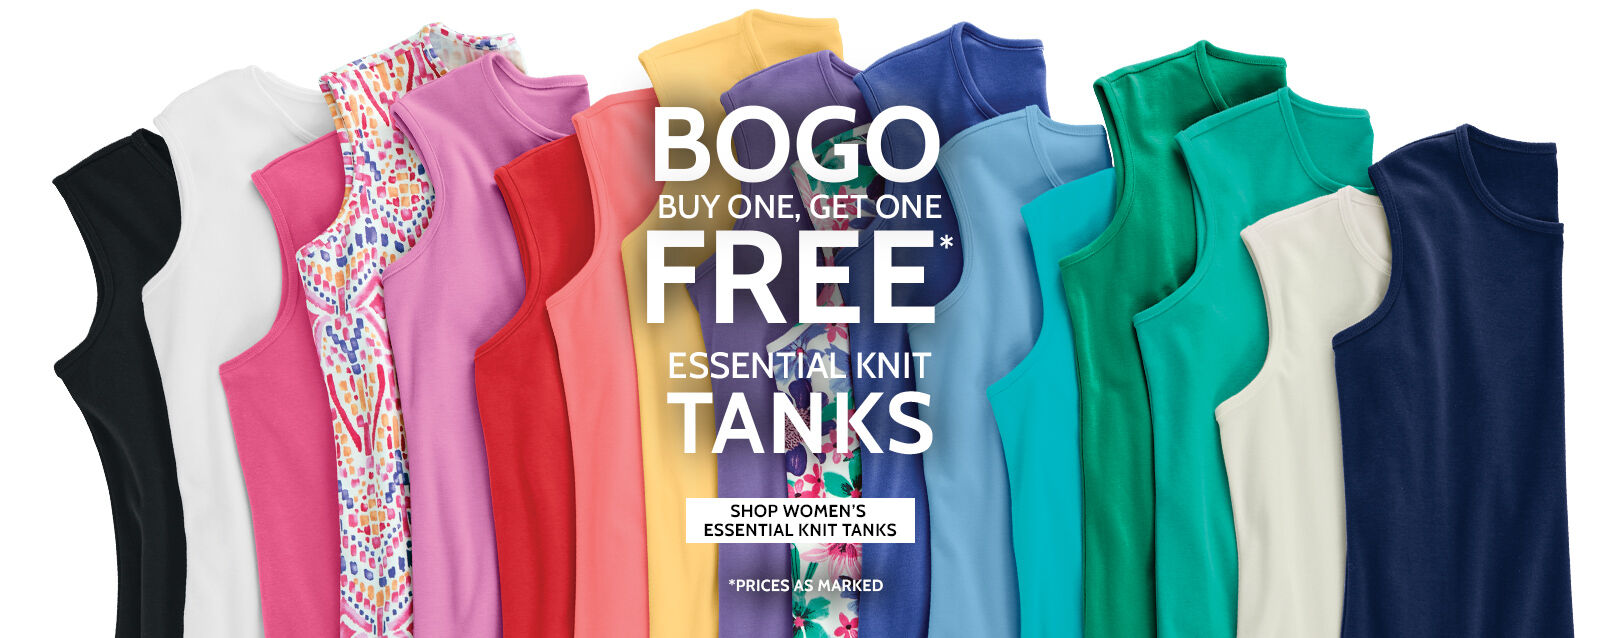 bogo buy one, get one free* essential knit tanks shop women's essential knit tanks *prices as marked